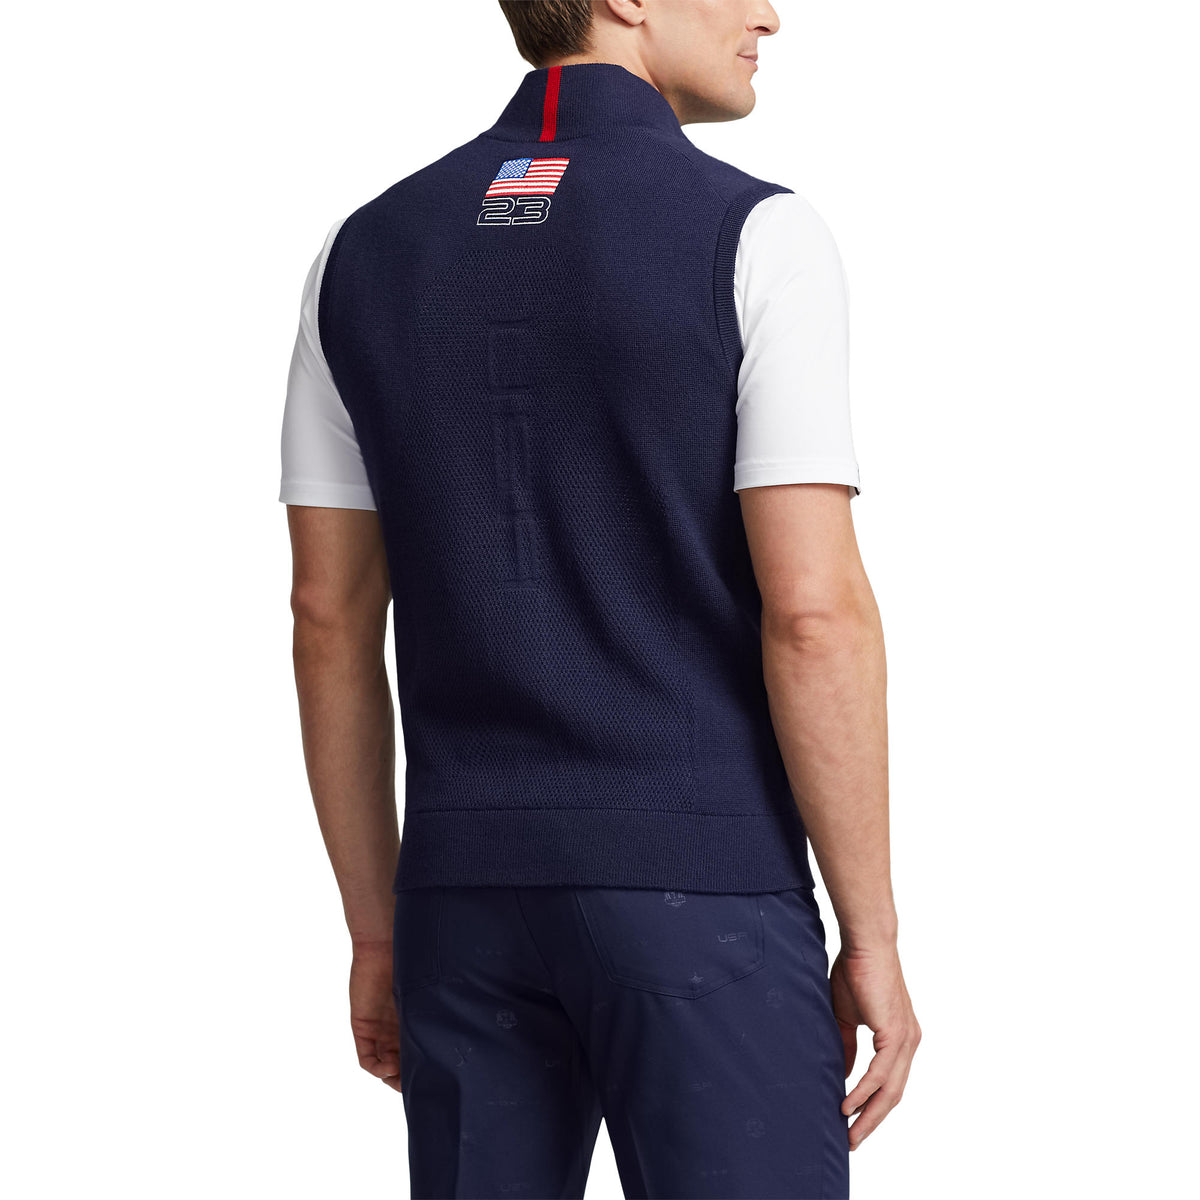 Ralph Lauren 2023 Ryder Cup Official Team Uniform Sweater Full Zip Vest